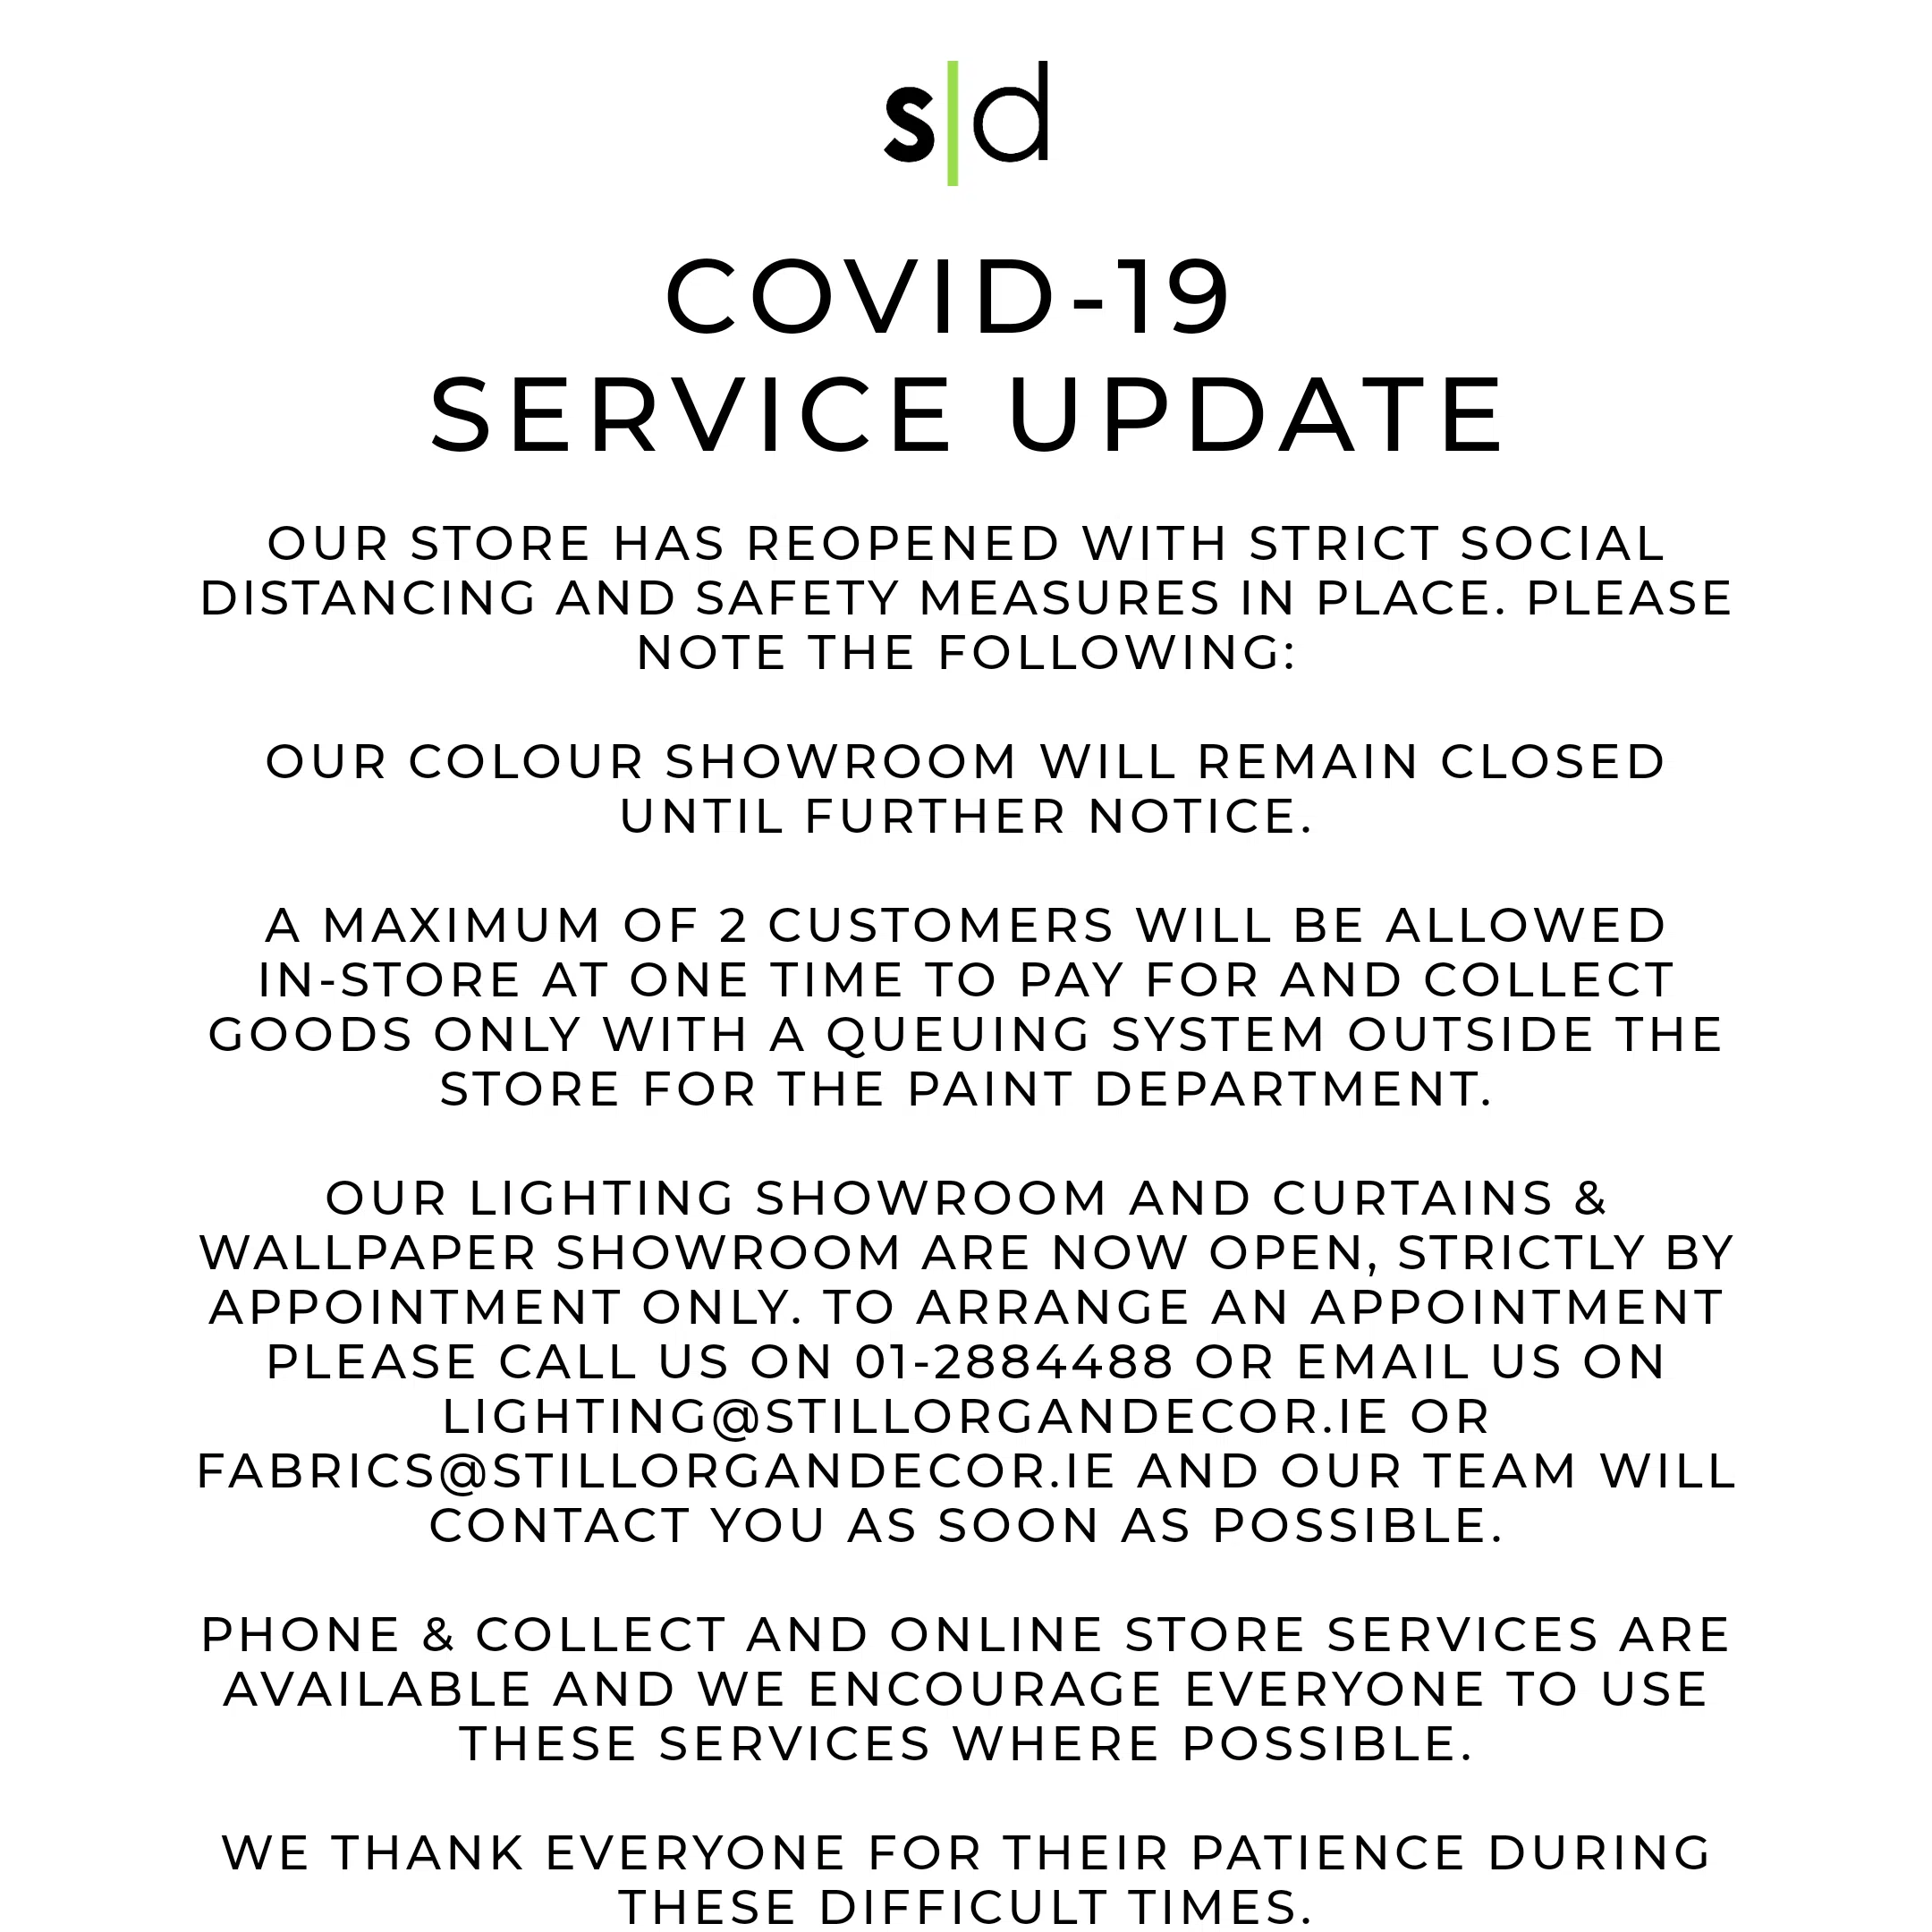 service update regarding covid-19 - Stillorgan Decor